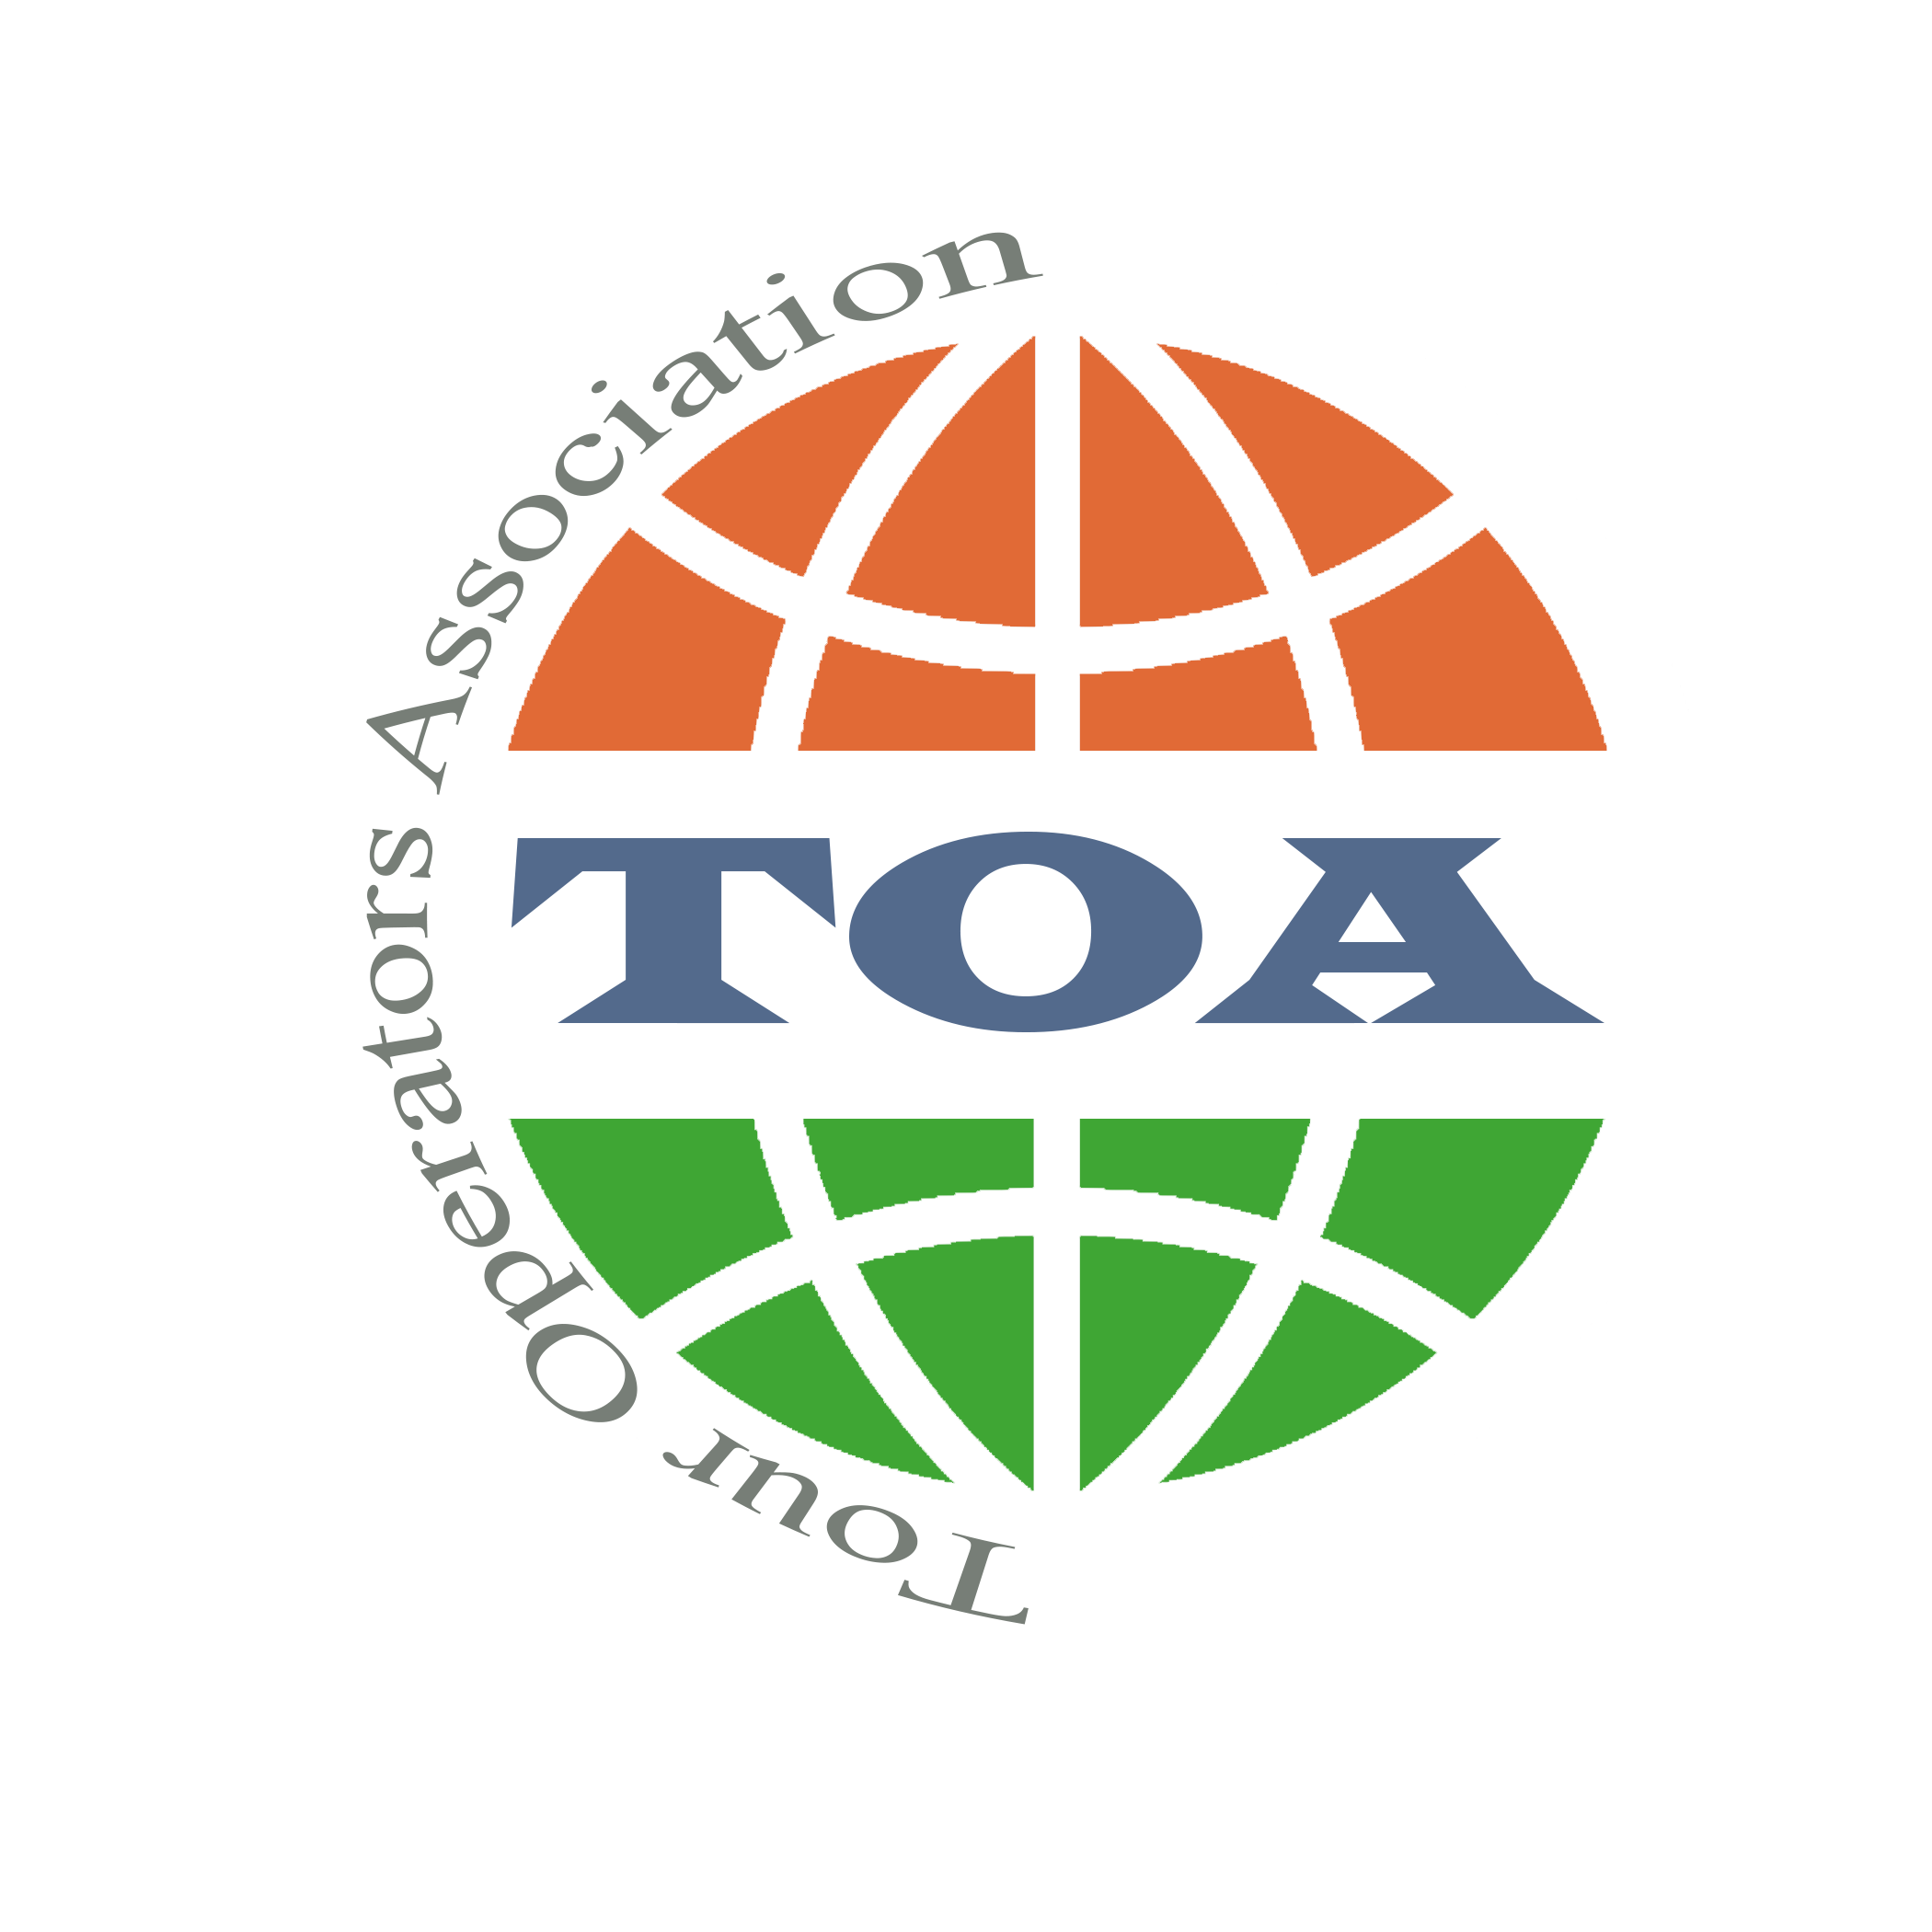 world tour operators association